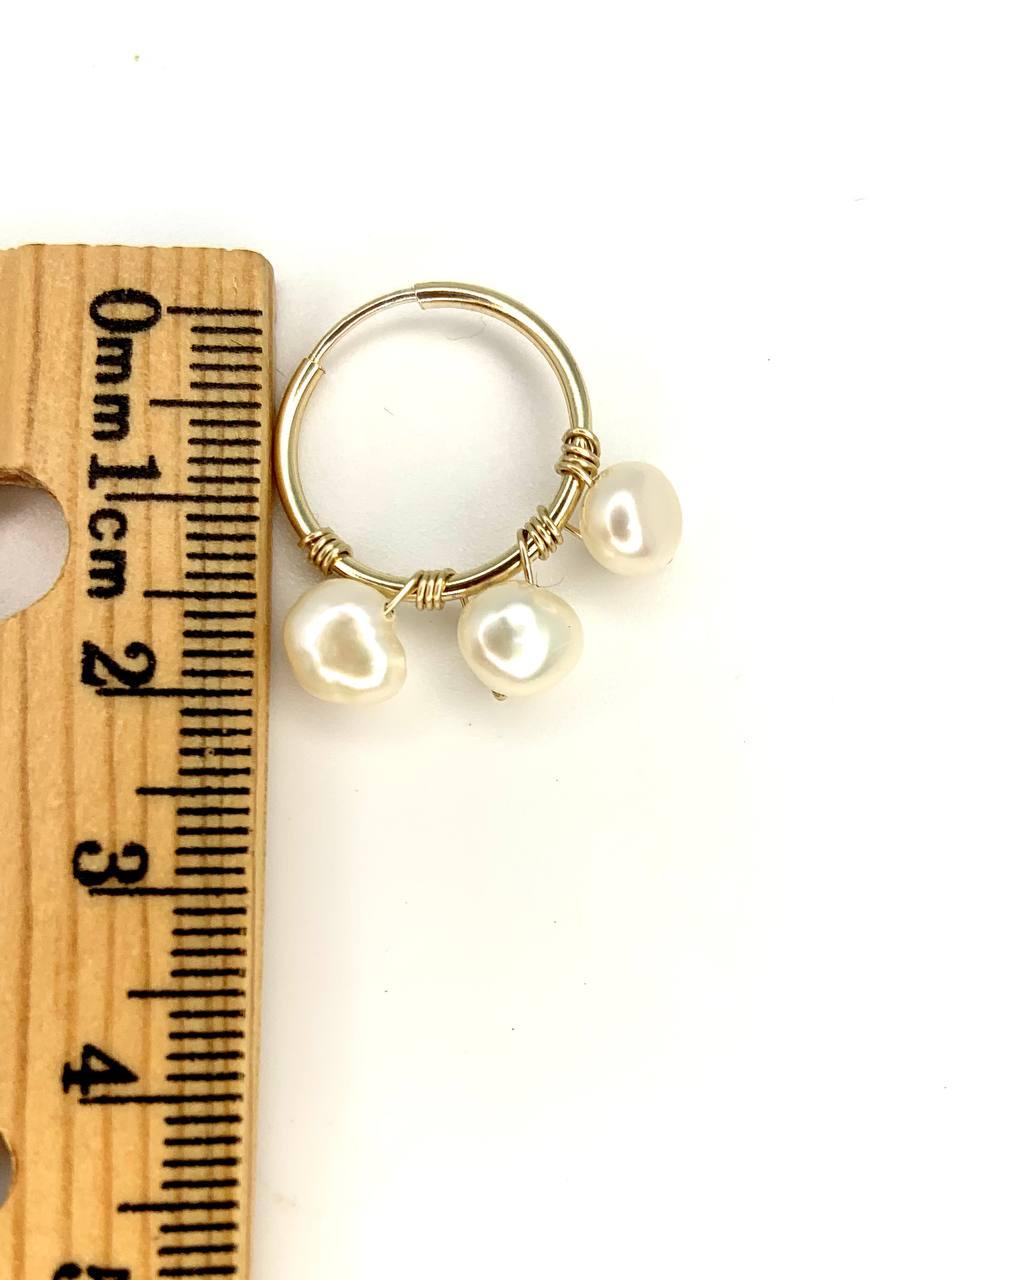 14k Gold Filled Hoop Earrings With 3 Pearl| For Everyday Wear - sjewellery|sara jewellery shop toronto